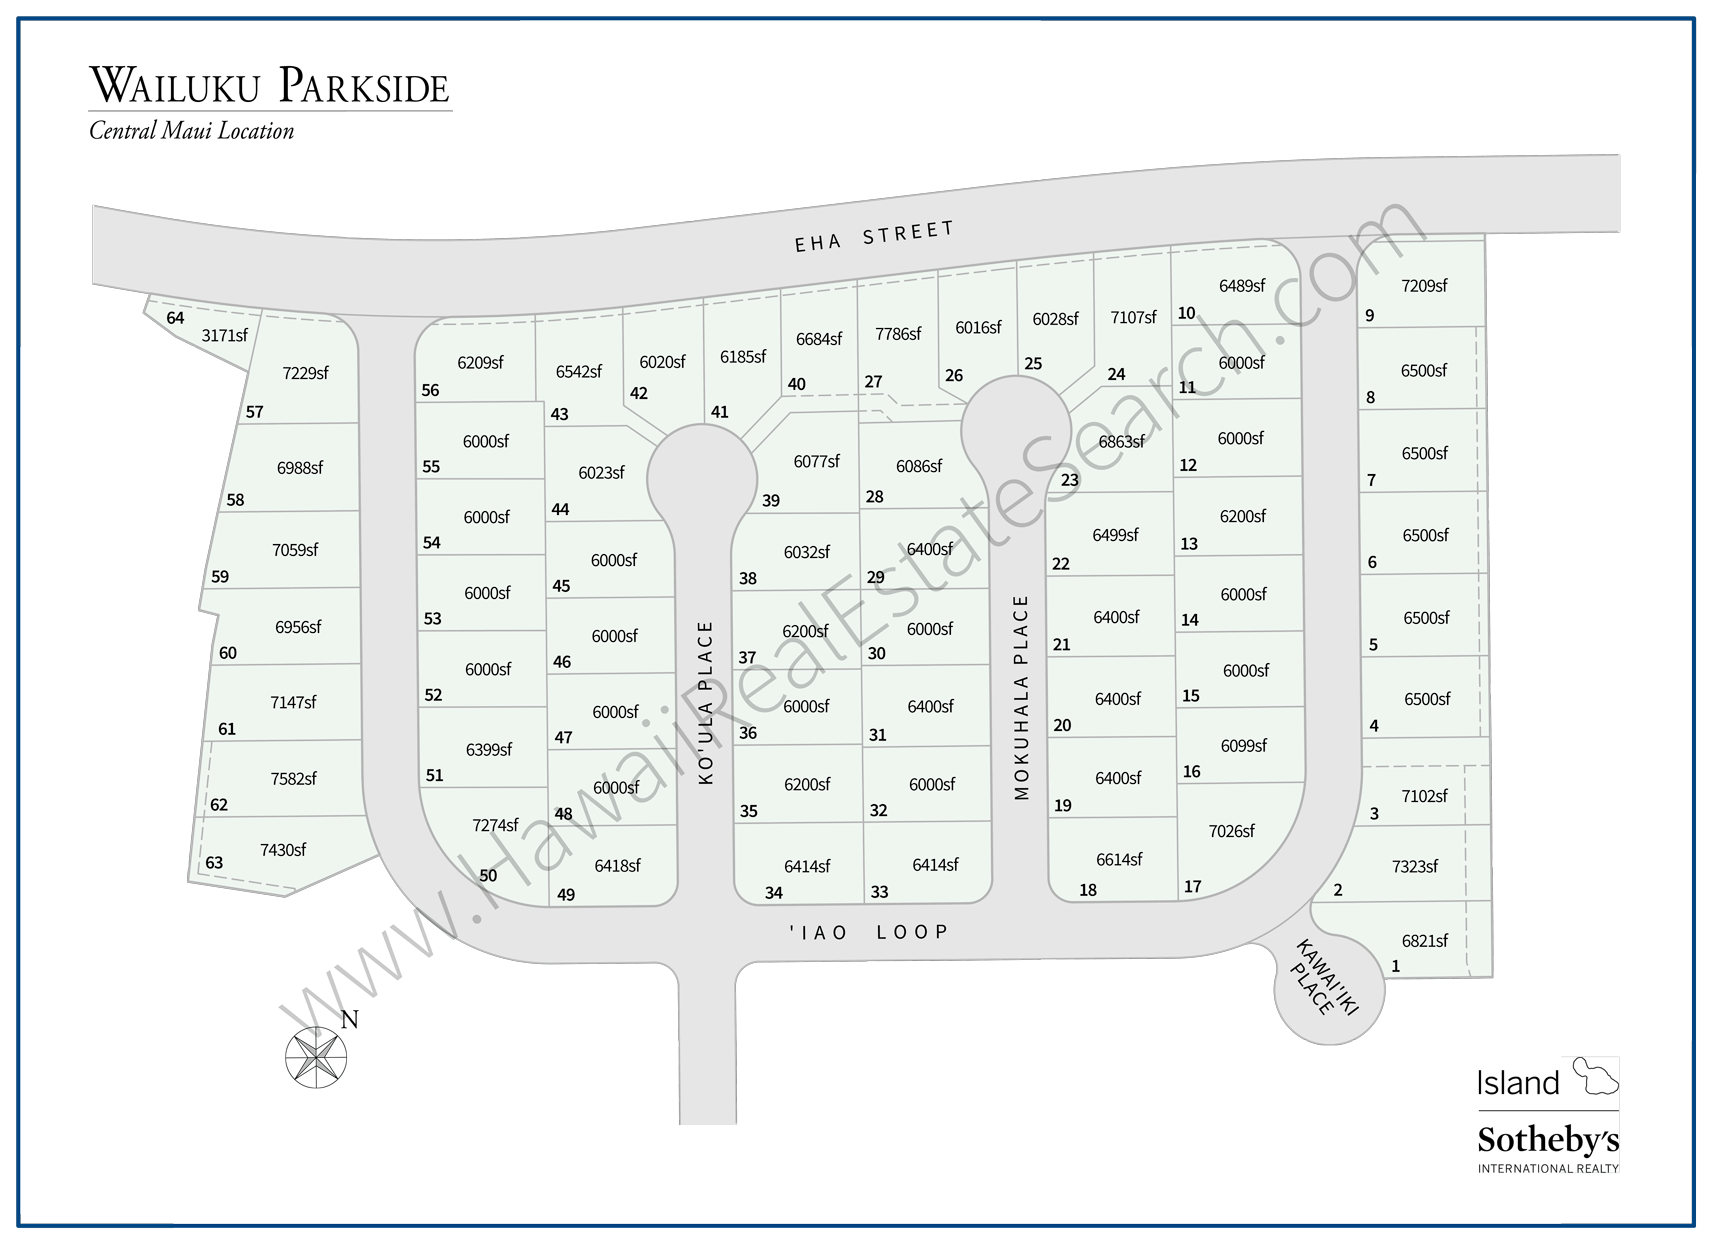 Wailuku Parkside Map